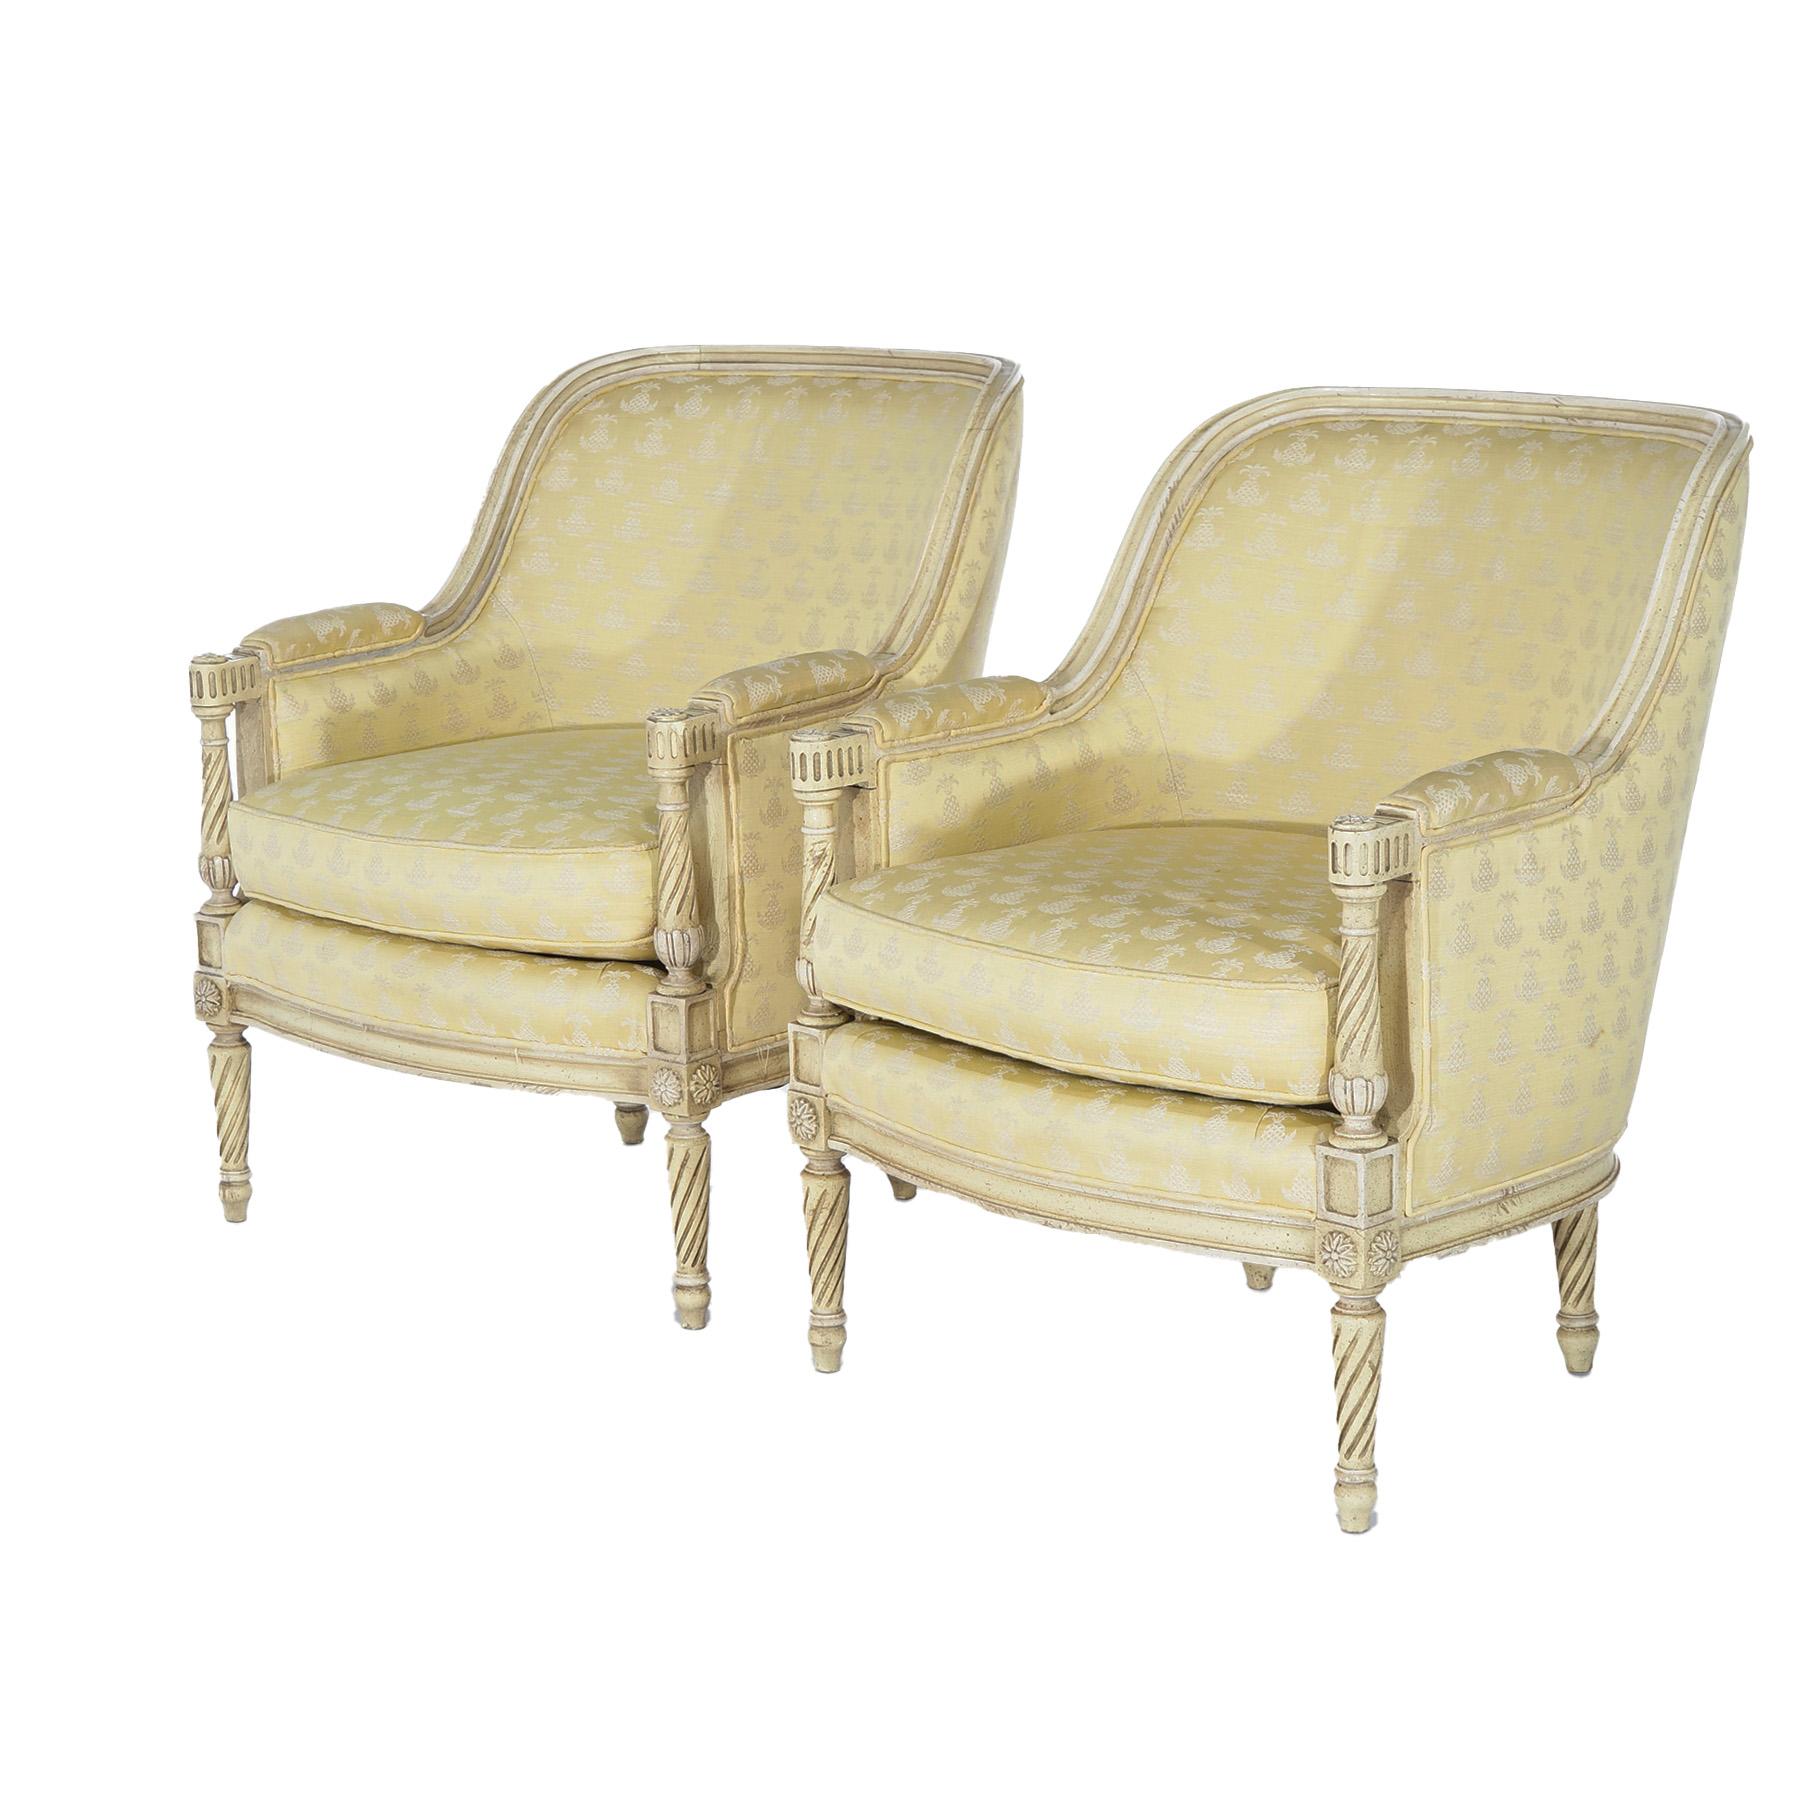 American Pair of Hibriten-Bernhardt French Louis XVI Style Bergère Chairs 20thC